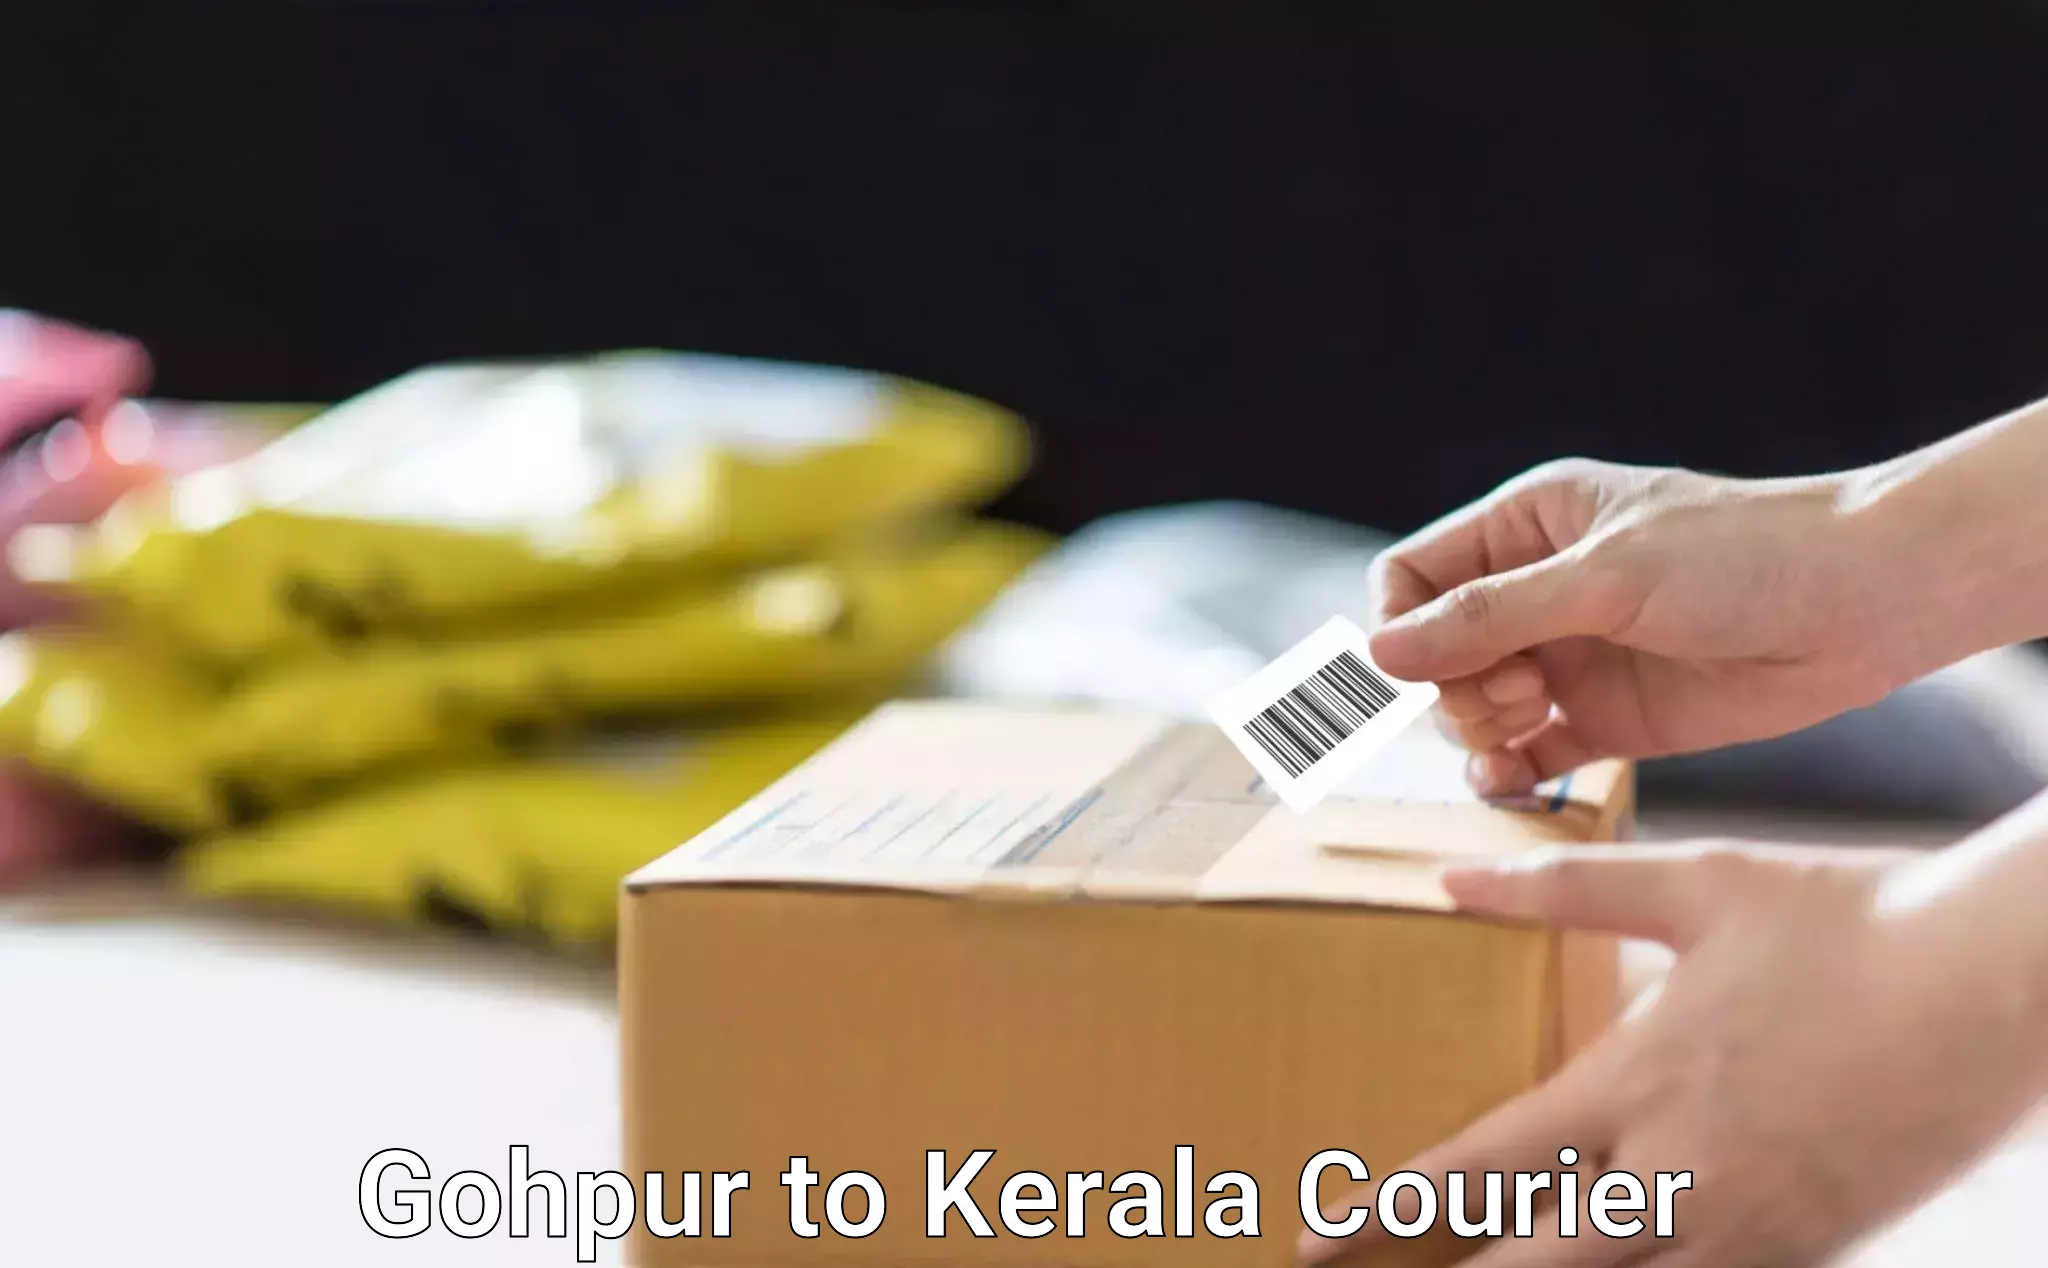 Reliable package handling Gohpur to Kerala